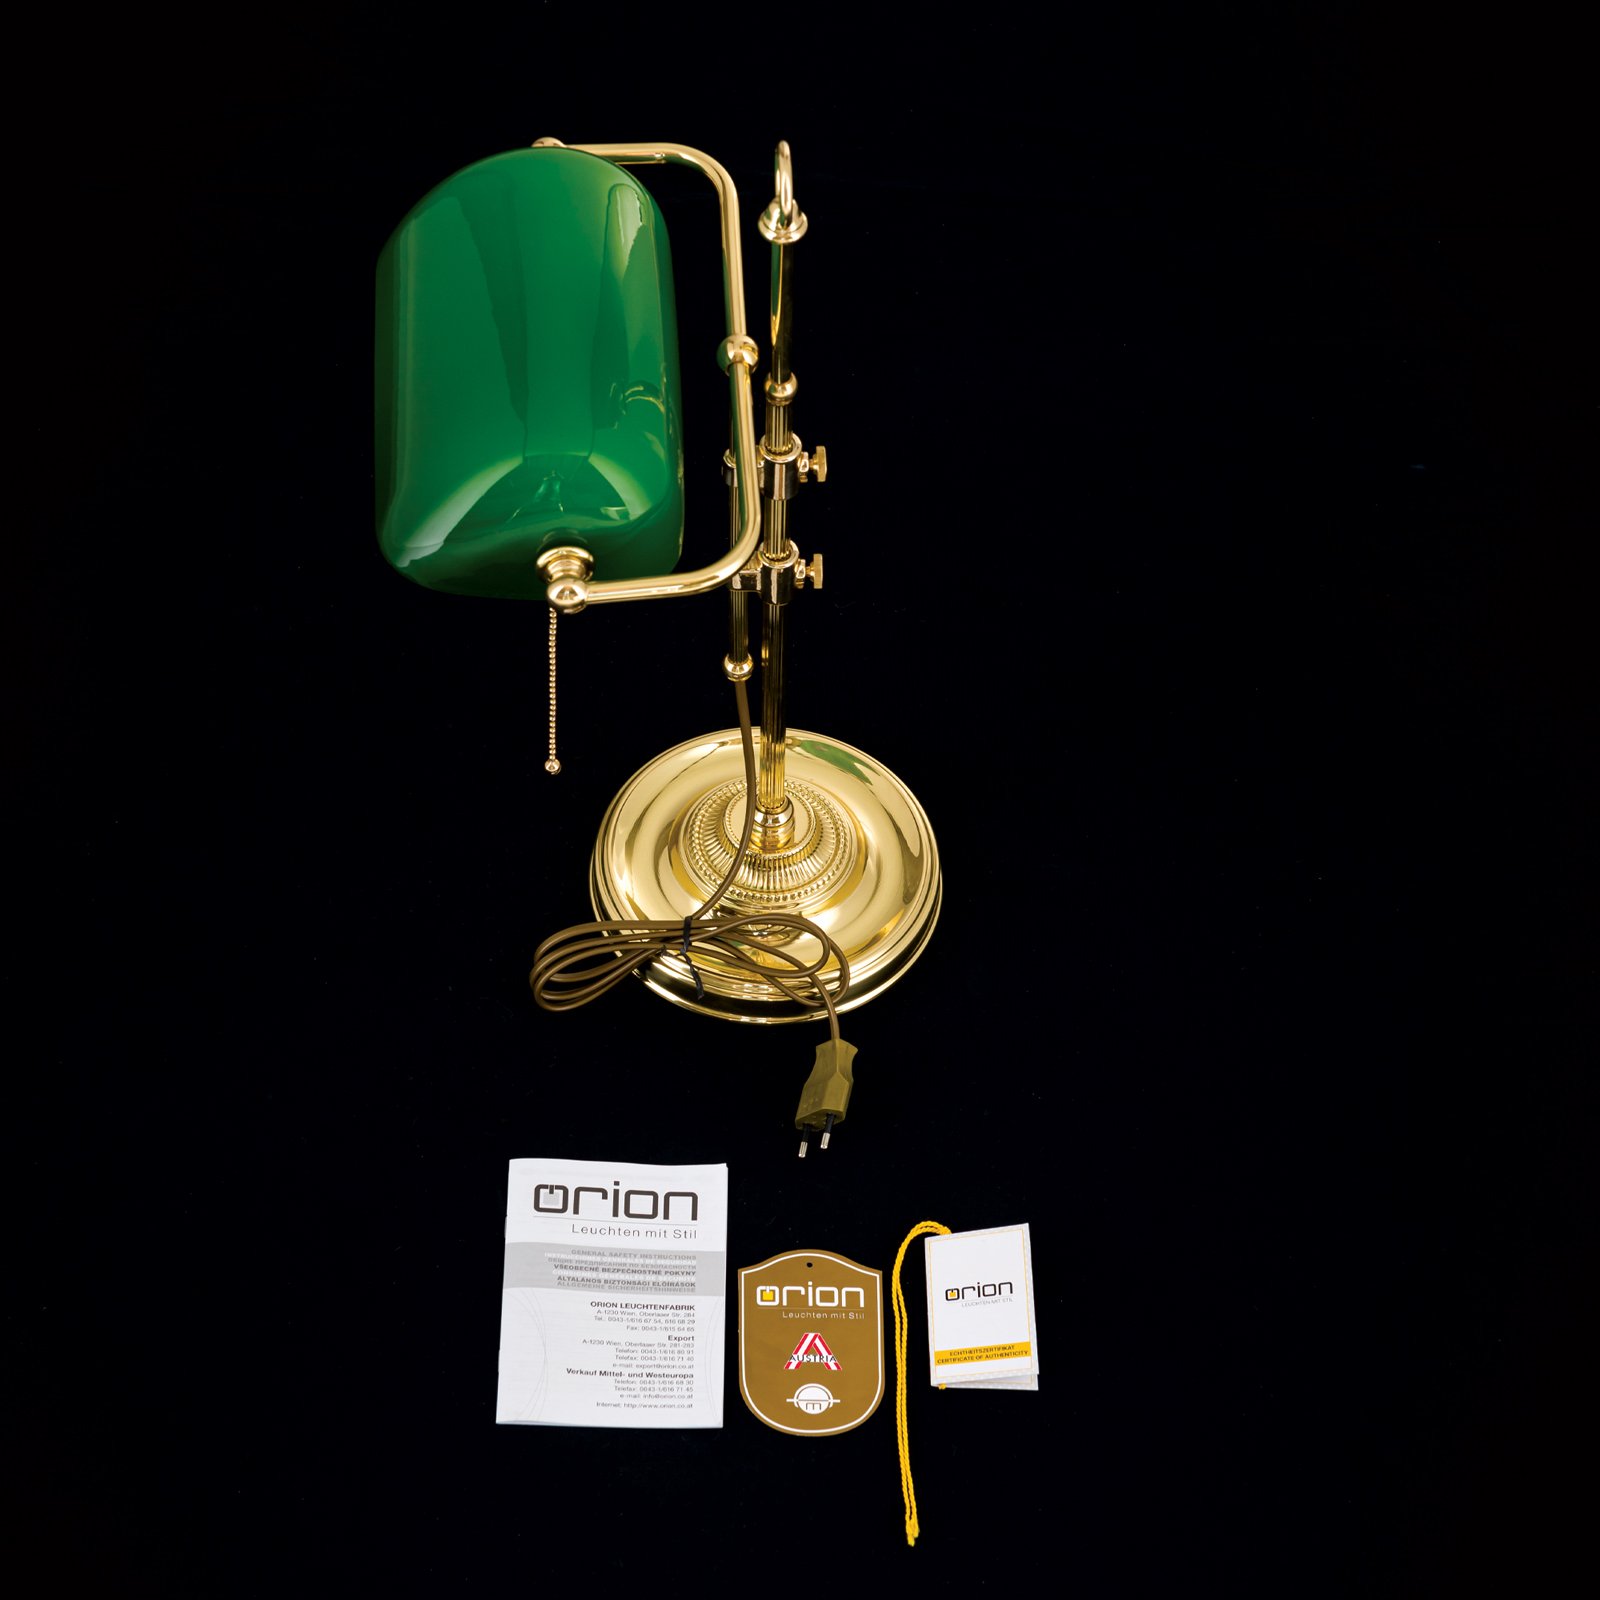 Harvard banker’s lamp, pull switch, brass/green